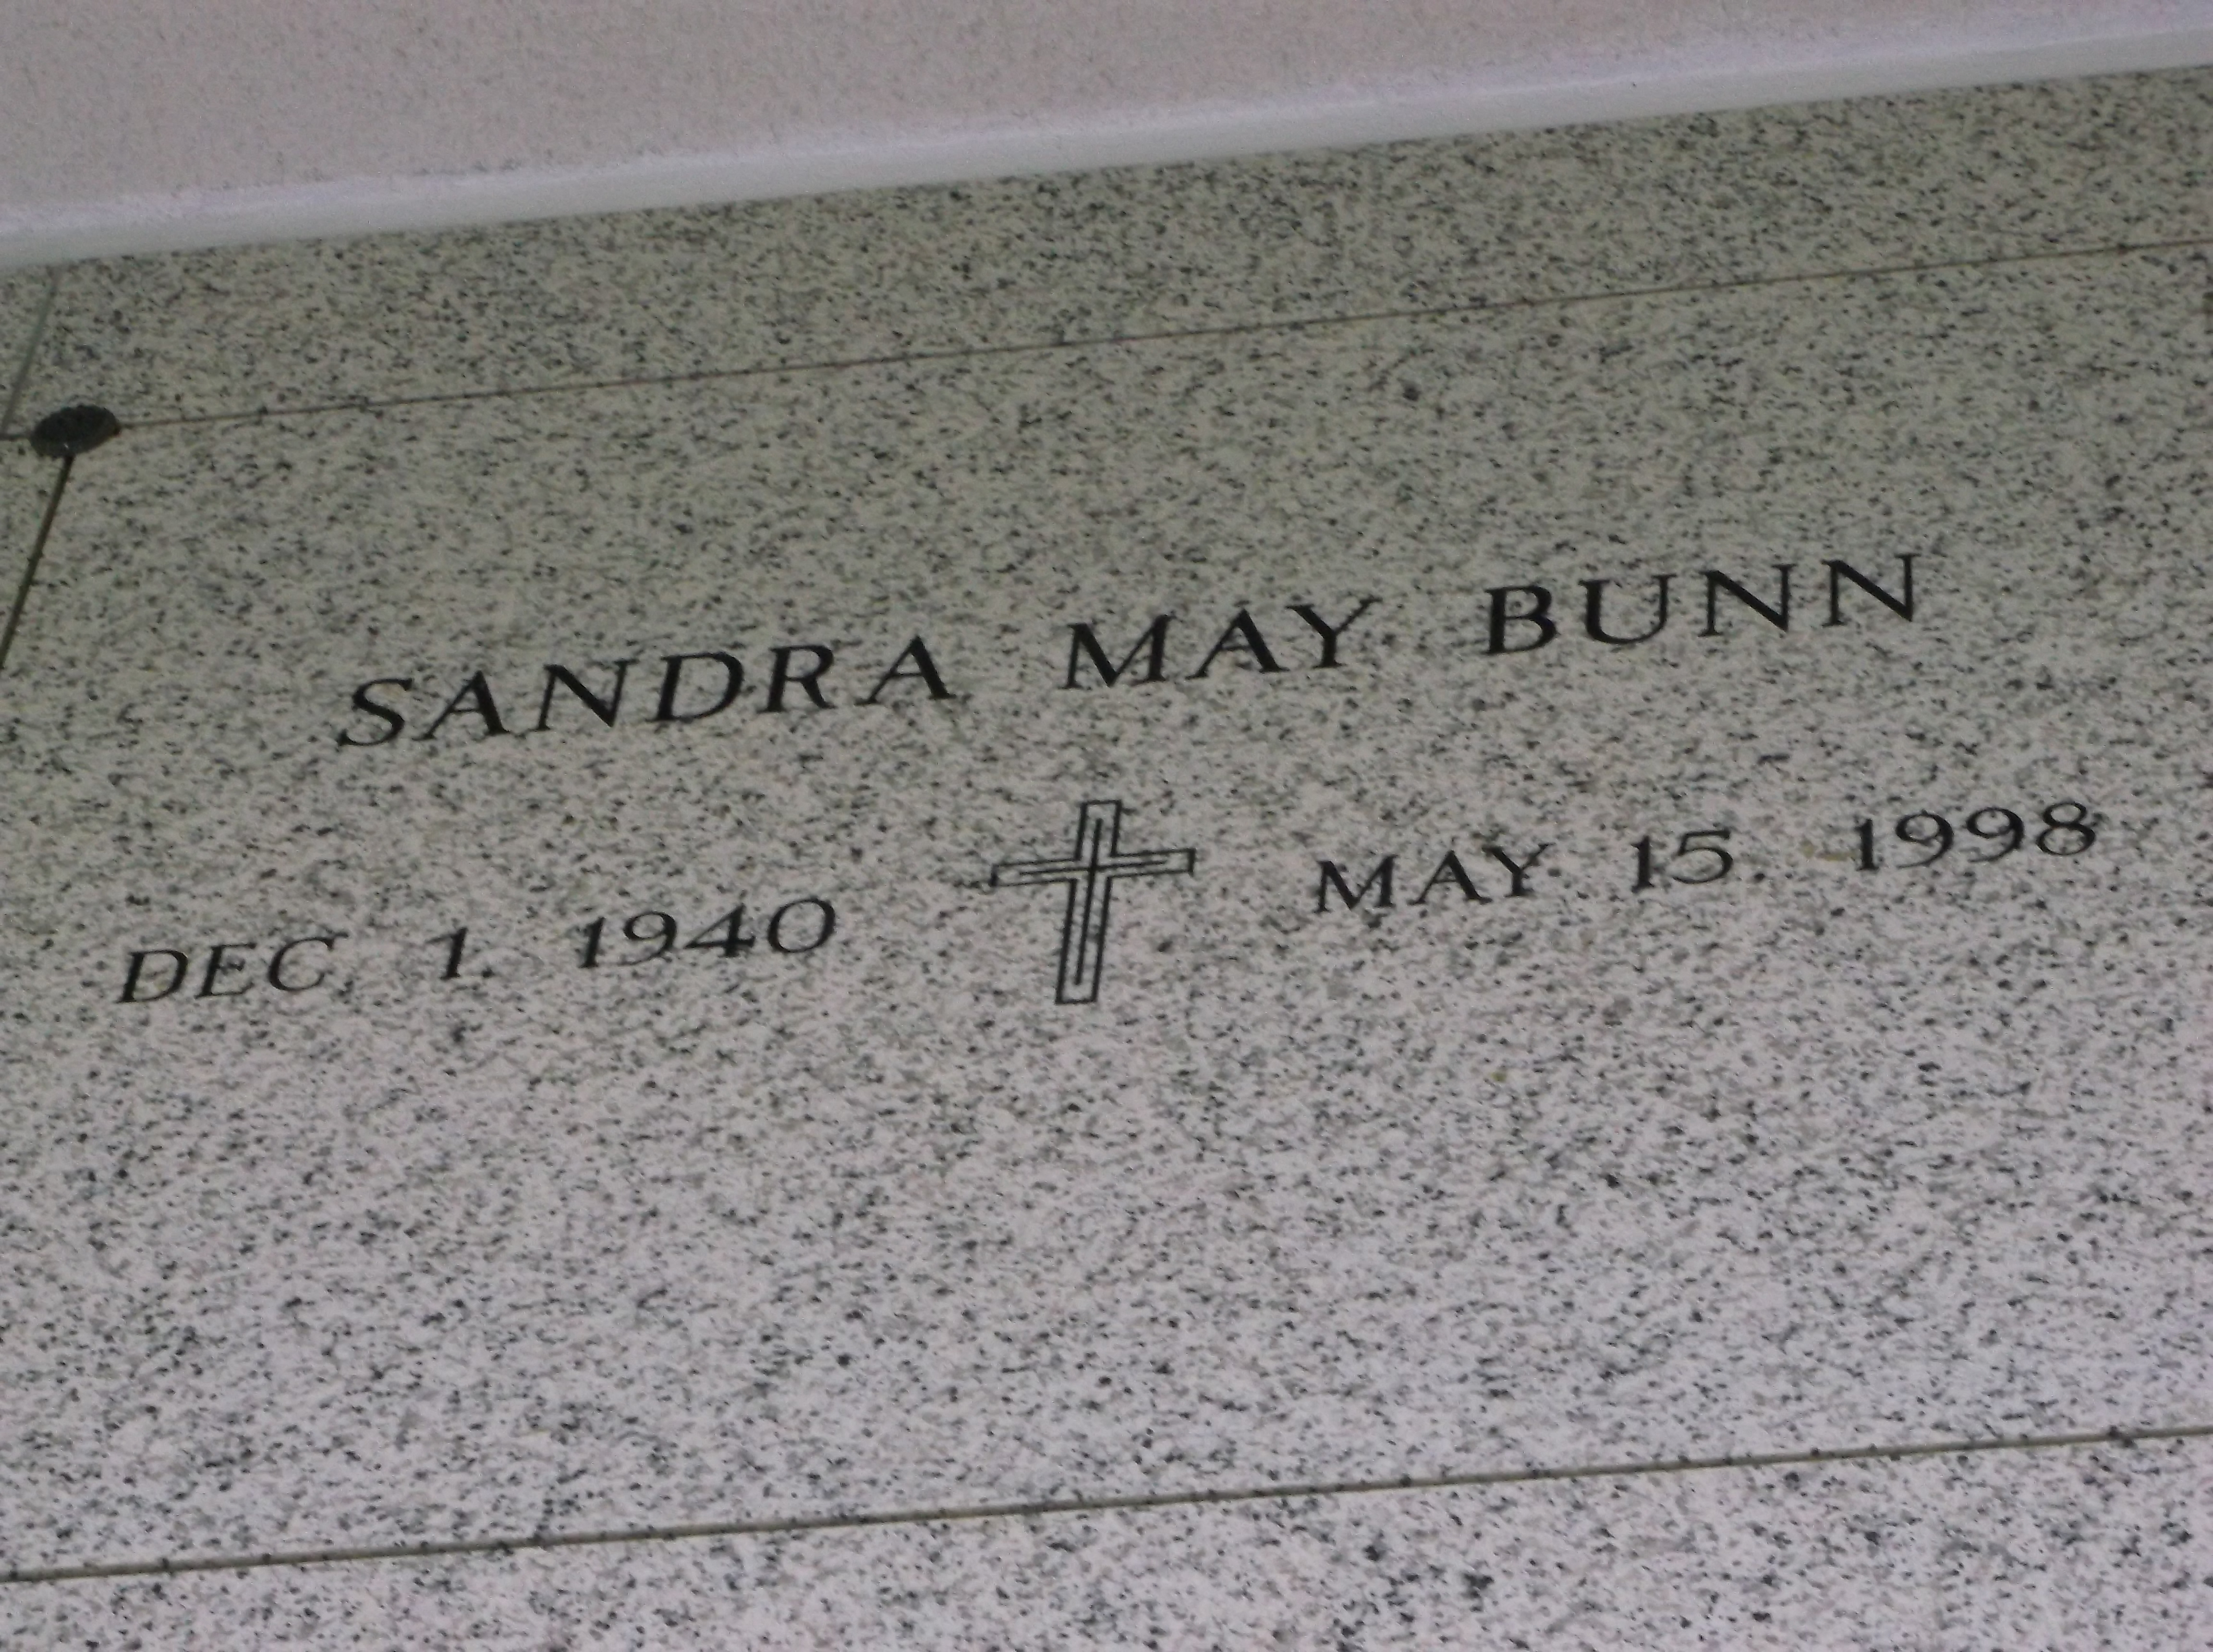 Sandra May Bunn